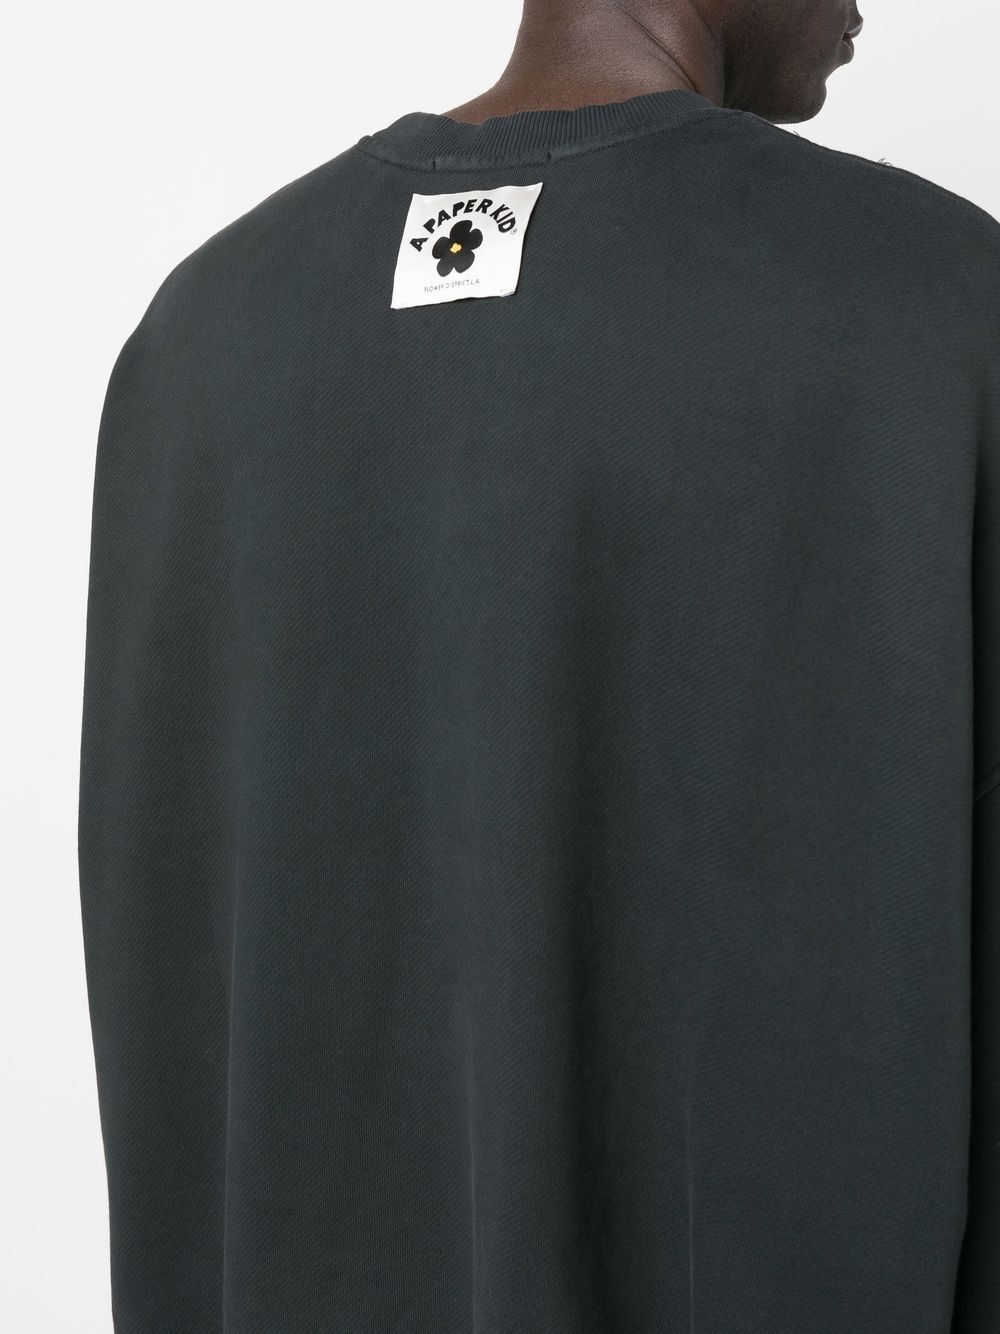 Black slouchy cotton sweatshirt